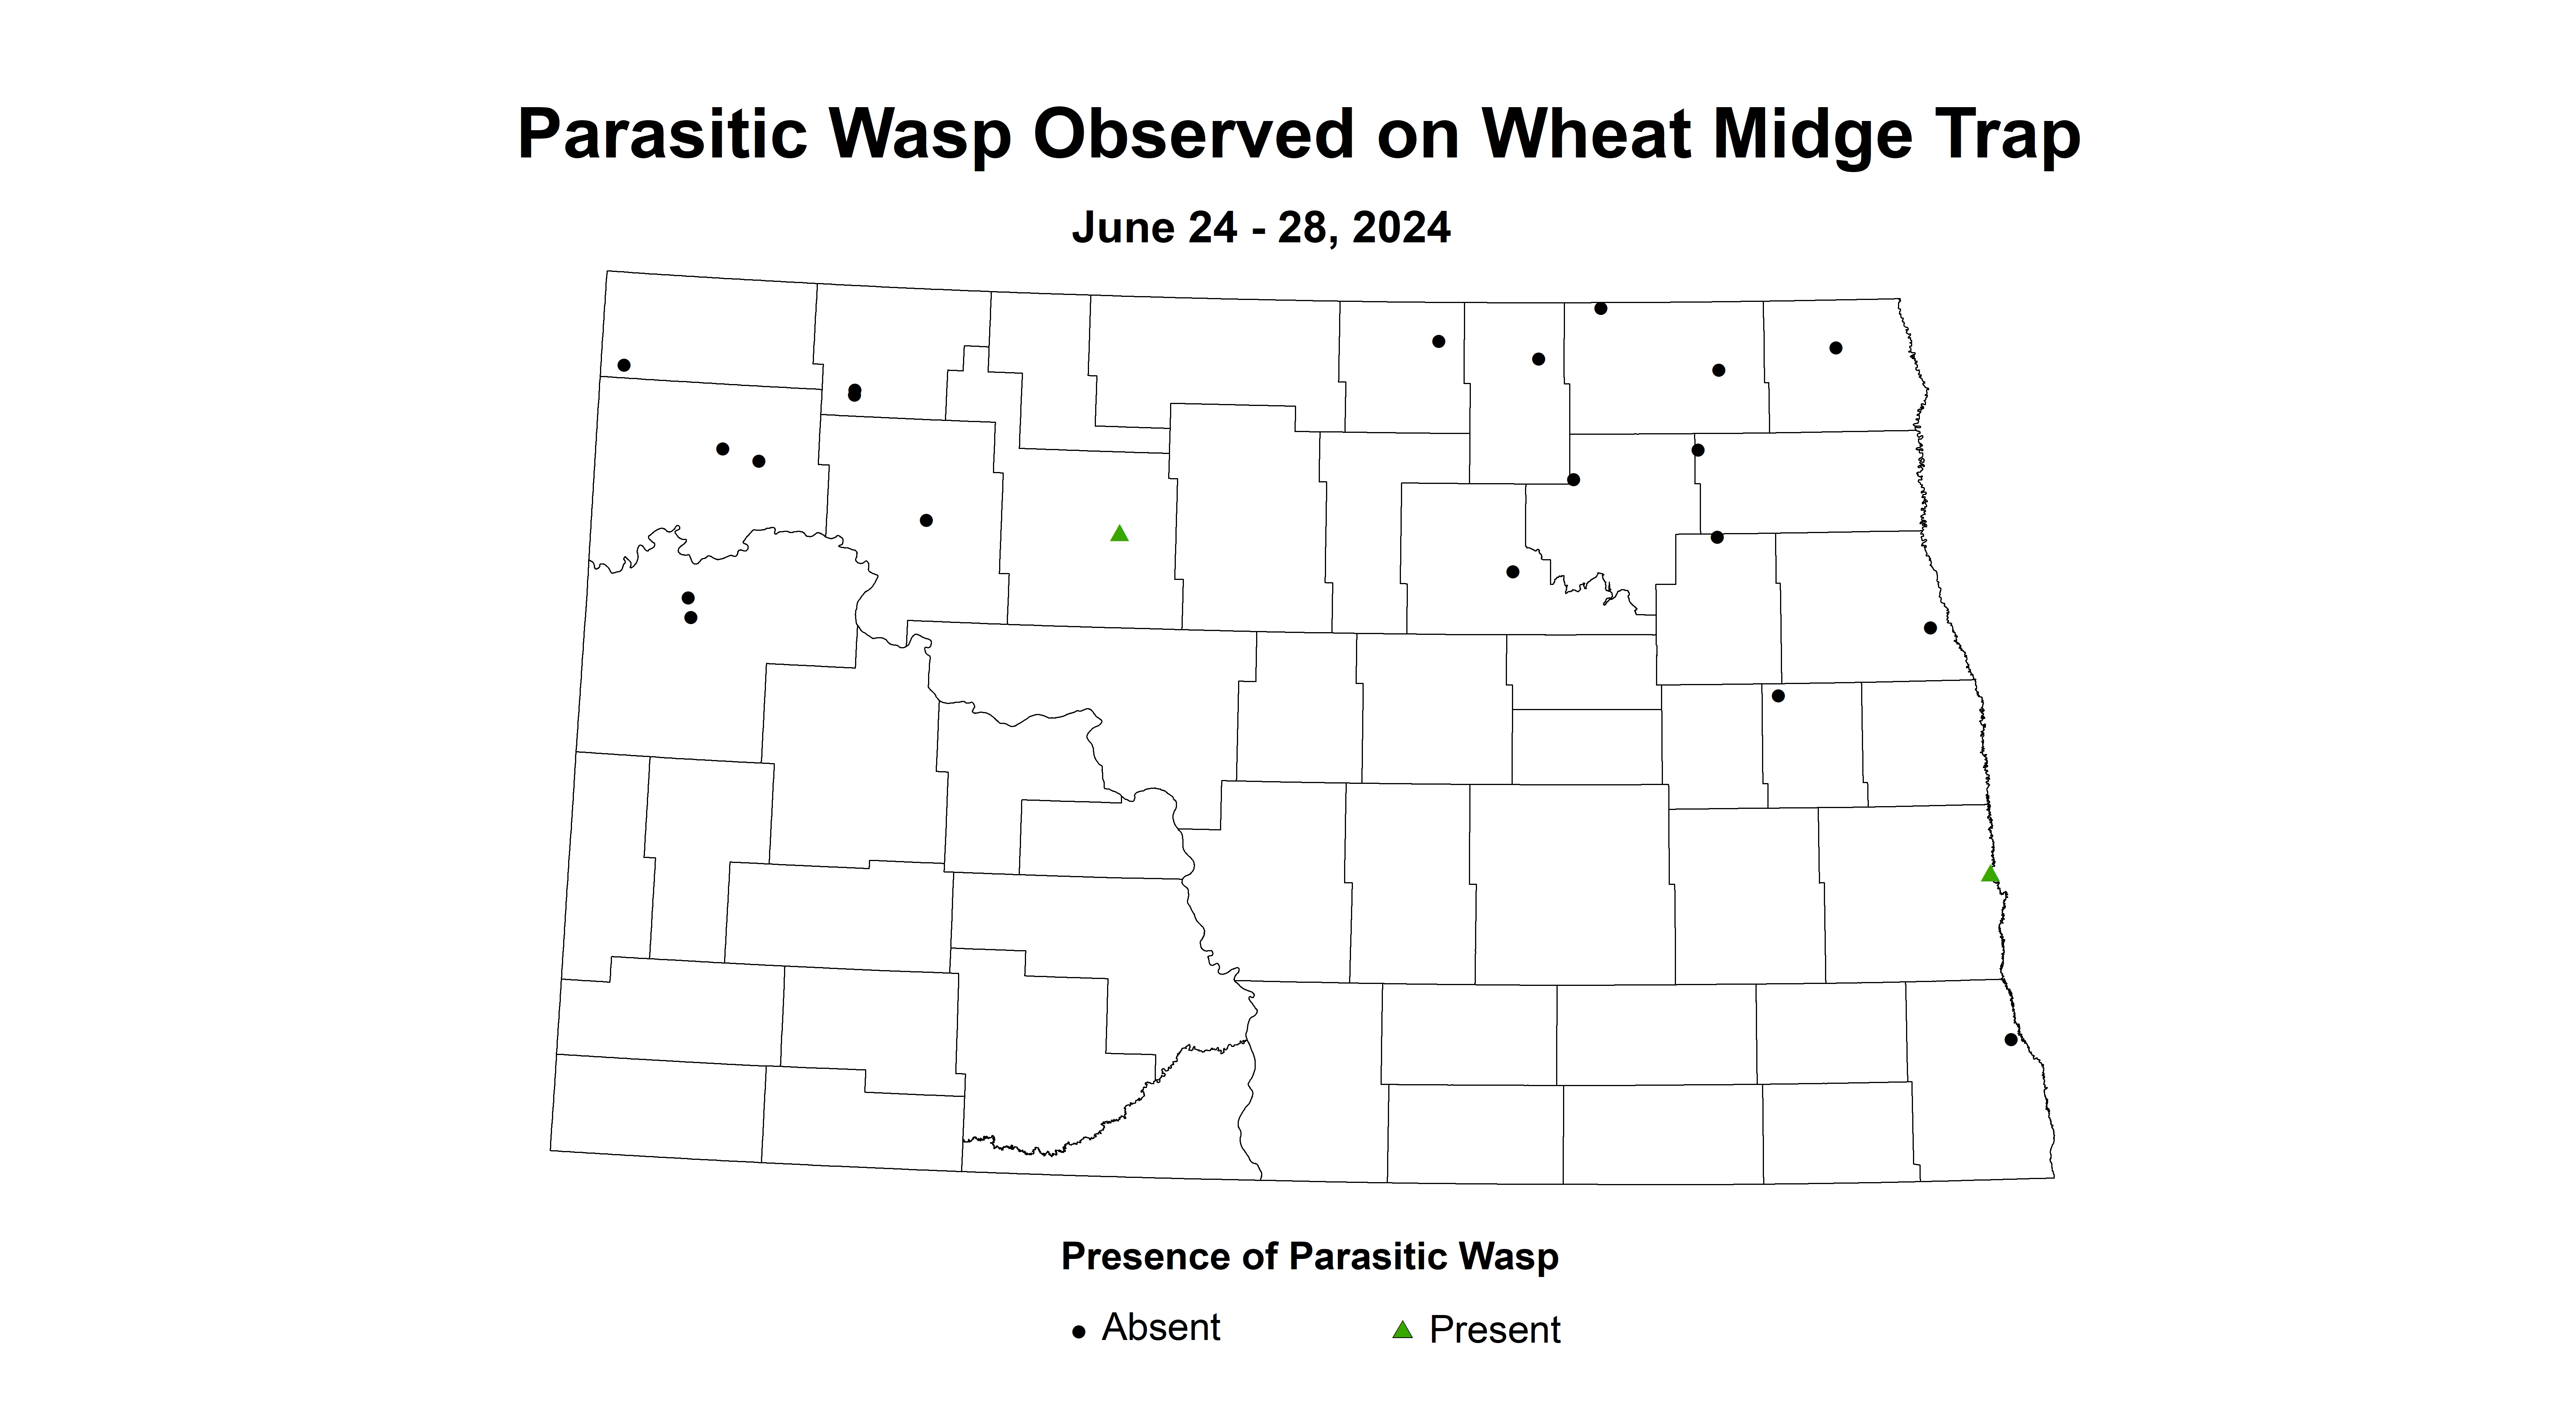 wheat midge trap parasitic wasp June 24-28 2024